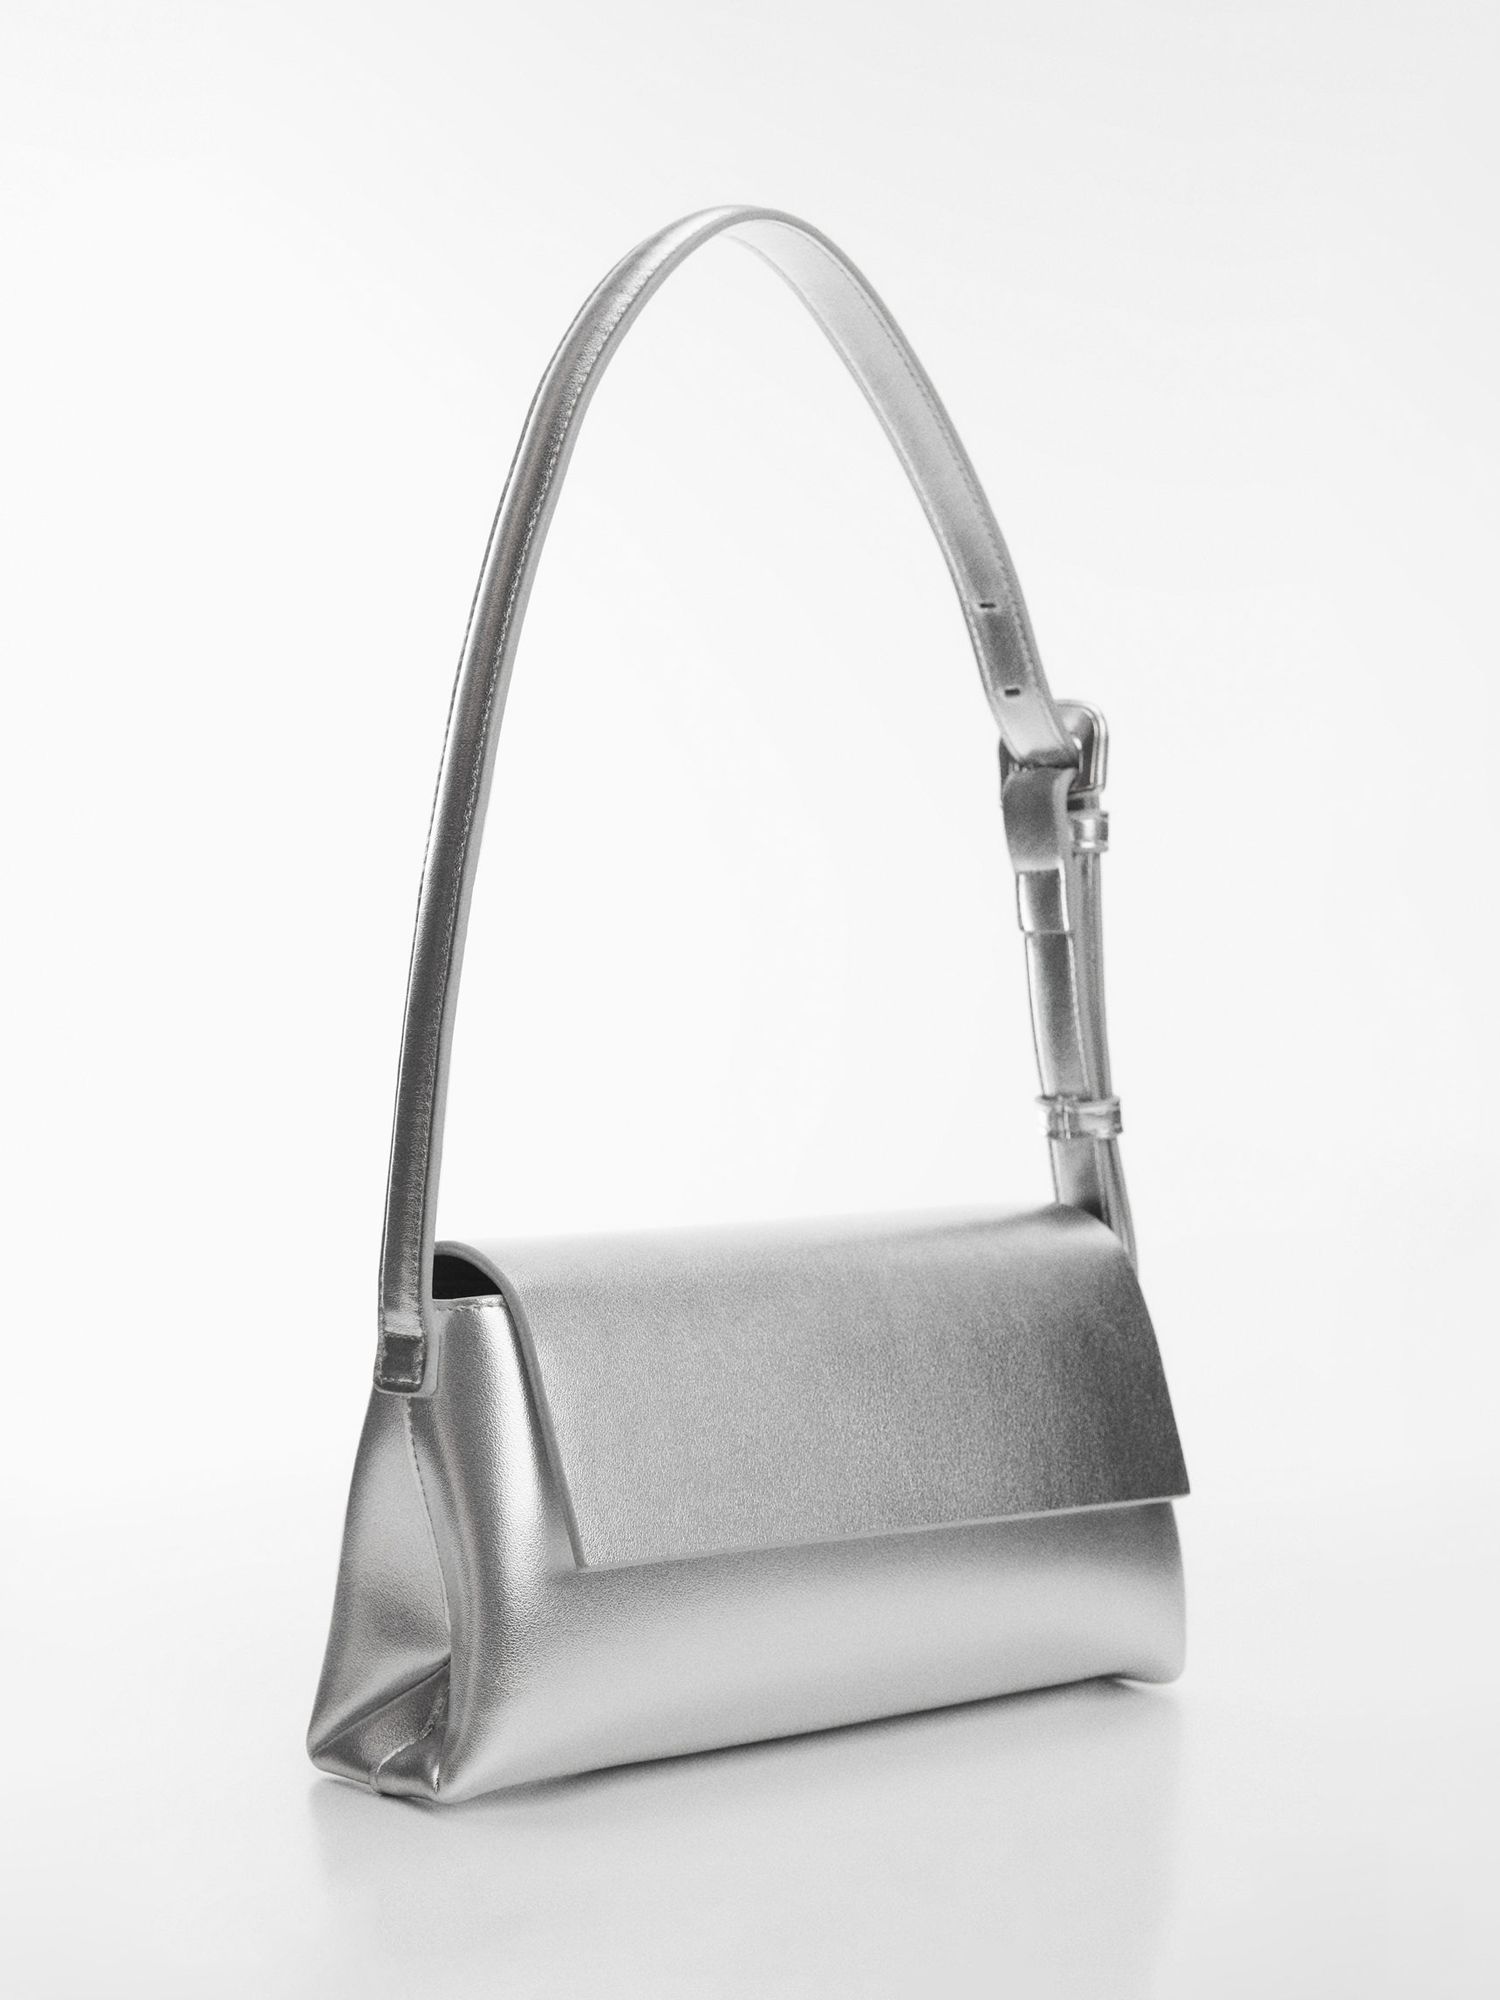 Mango Lucer Medium Sholder Bag, Silver £29.99